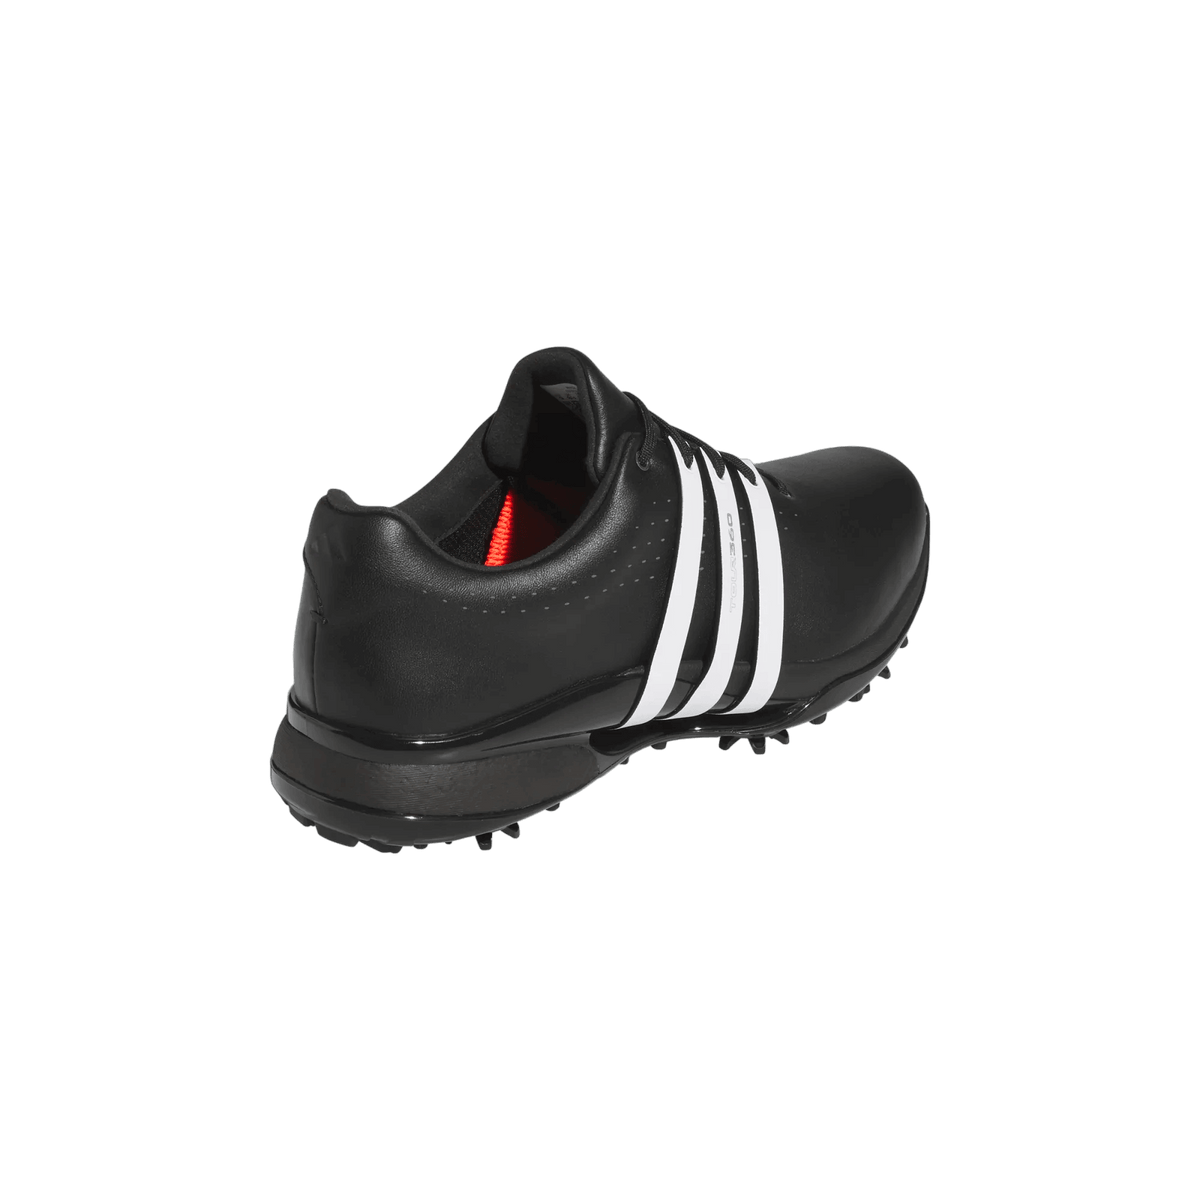 Adidas Men's Climacool Golf Shoe - Black/Cyan (Size 8) (web only) -  Riverside Golf - Golf Clubs - Golf Bags - Golfing Equipment